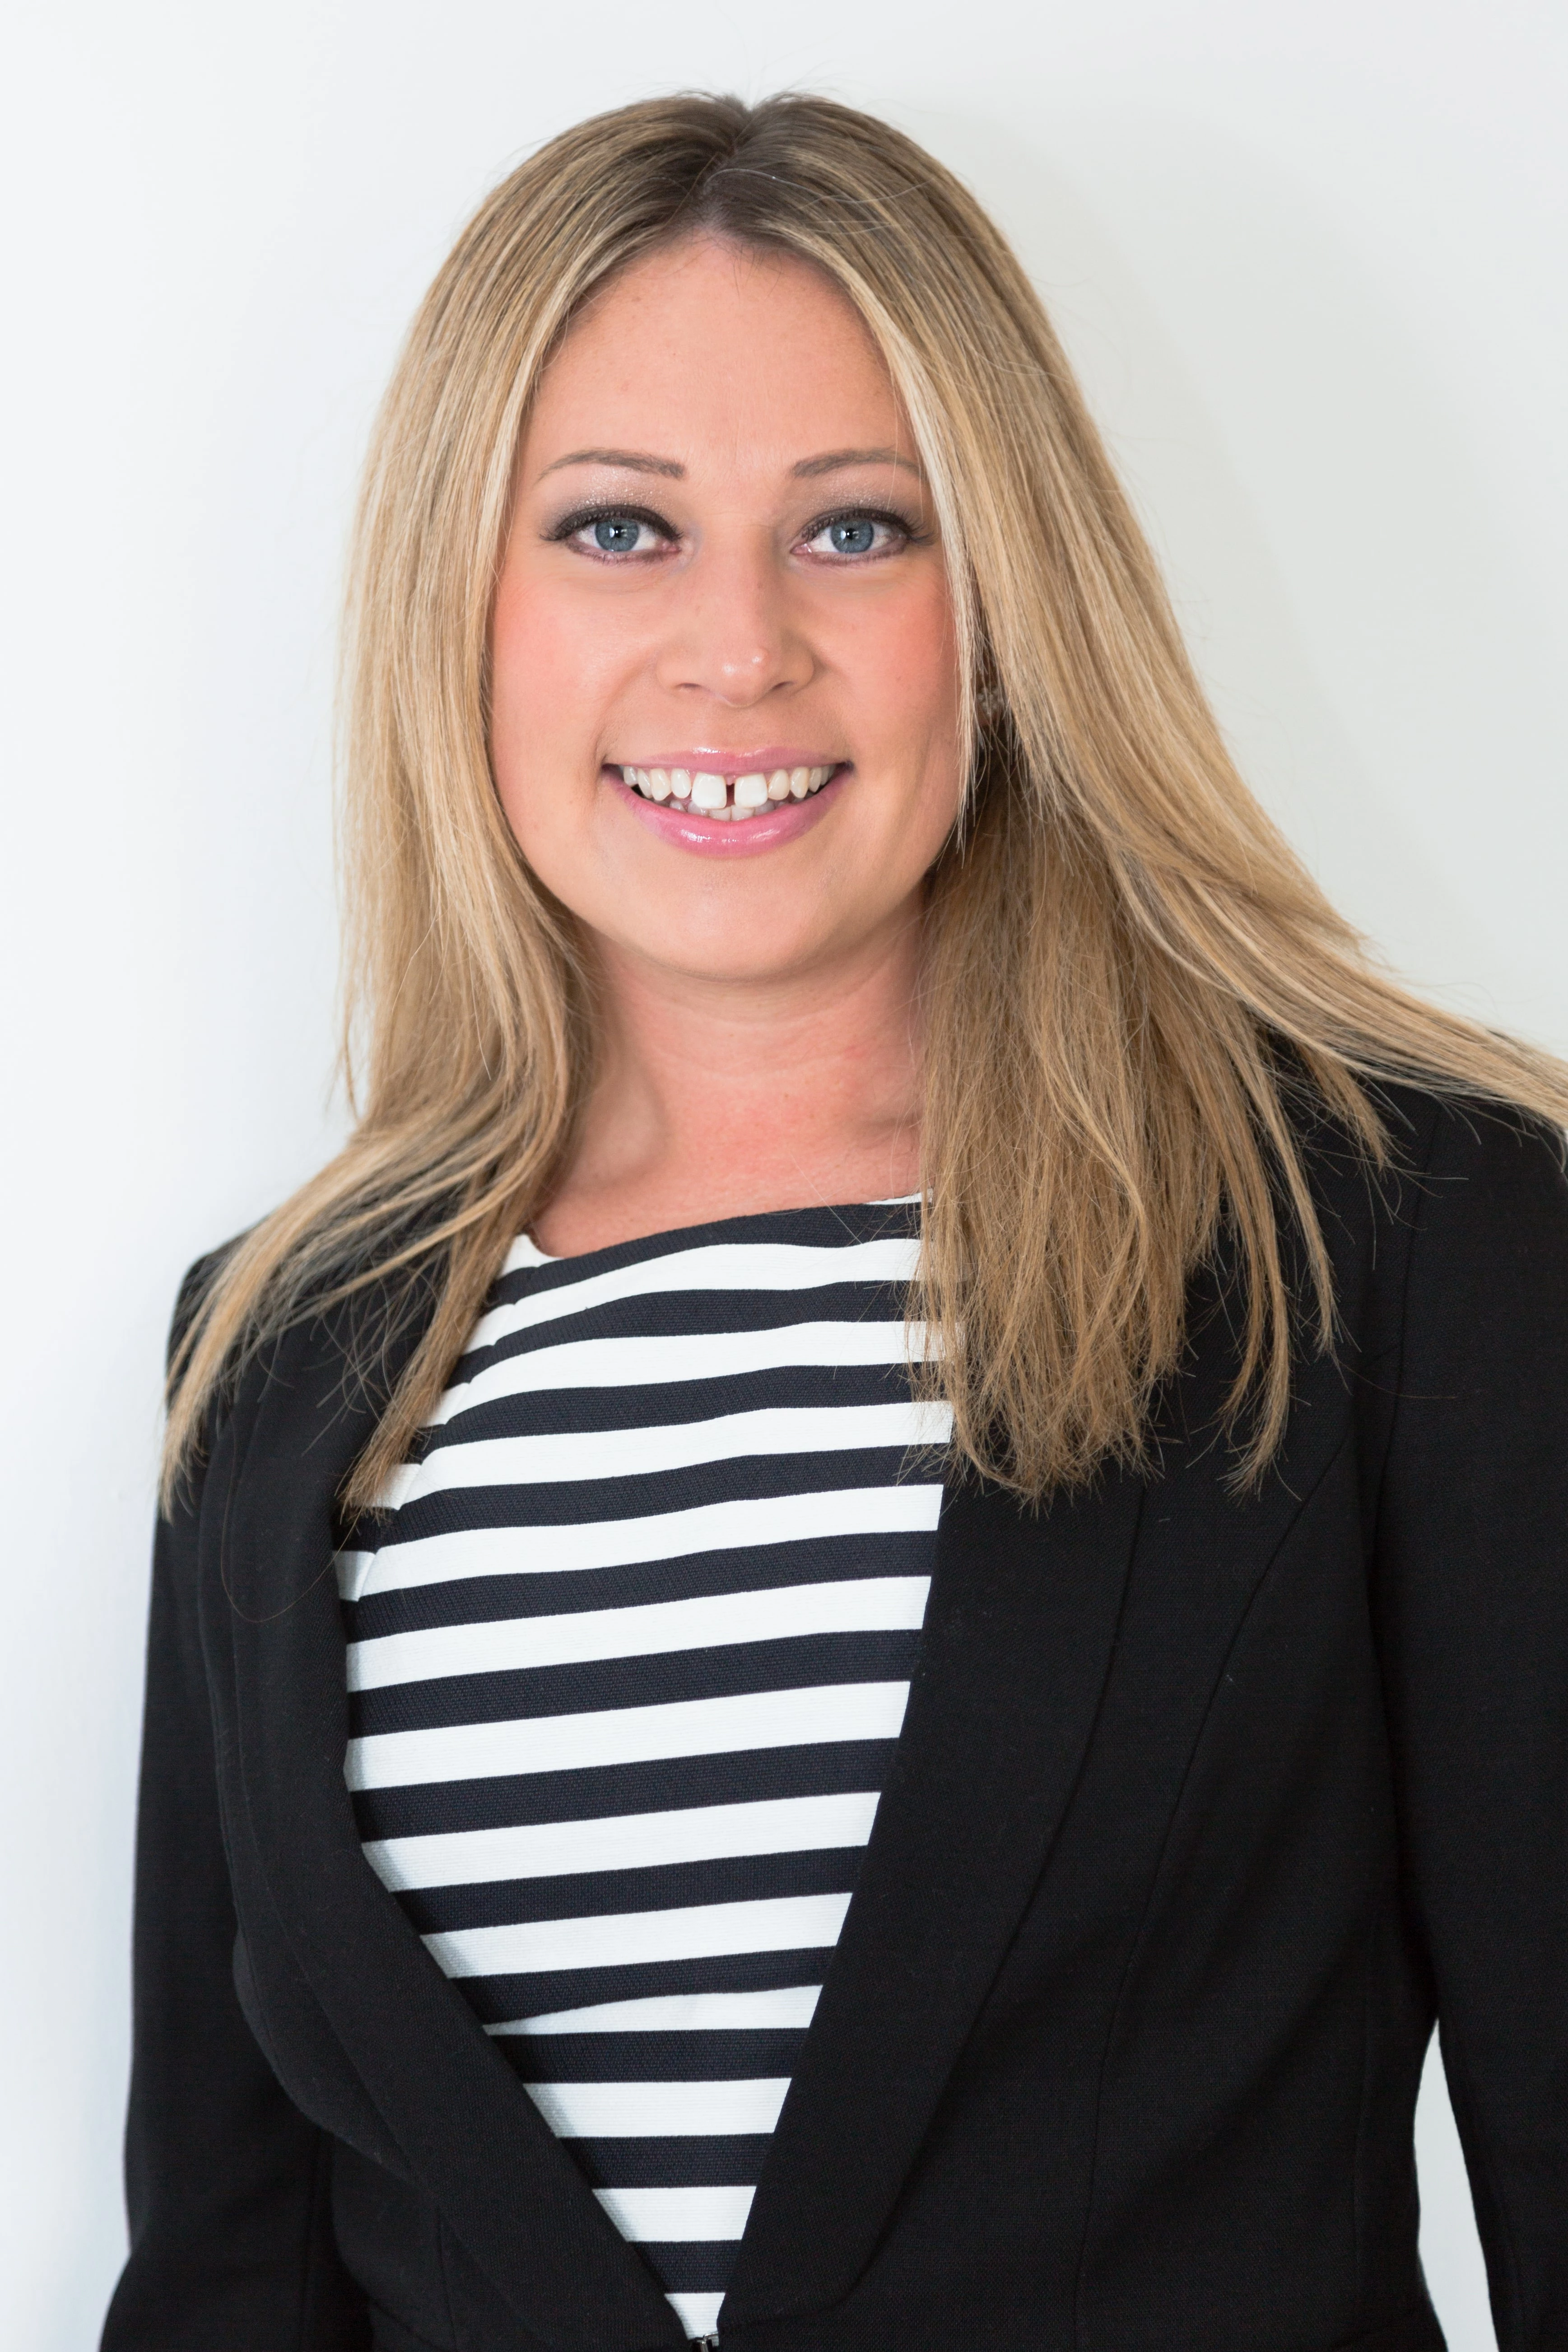 Suzie McCafferty, one of the UK's premier franchise experts